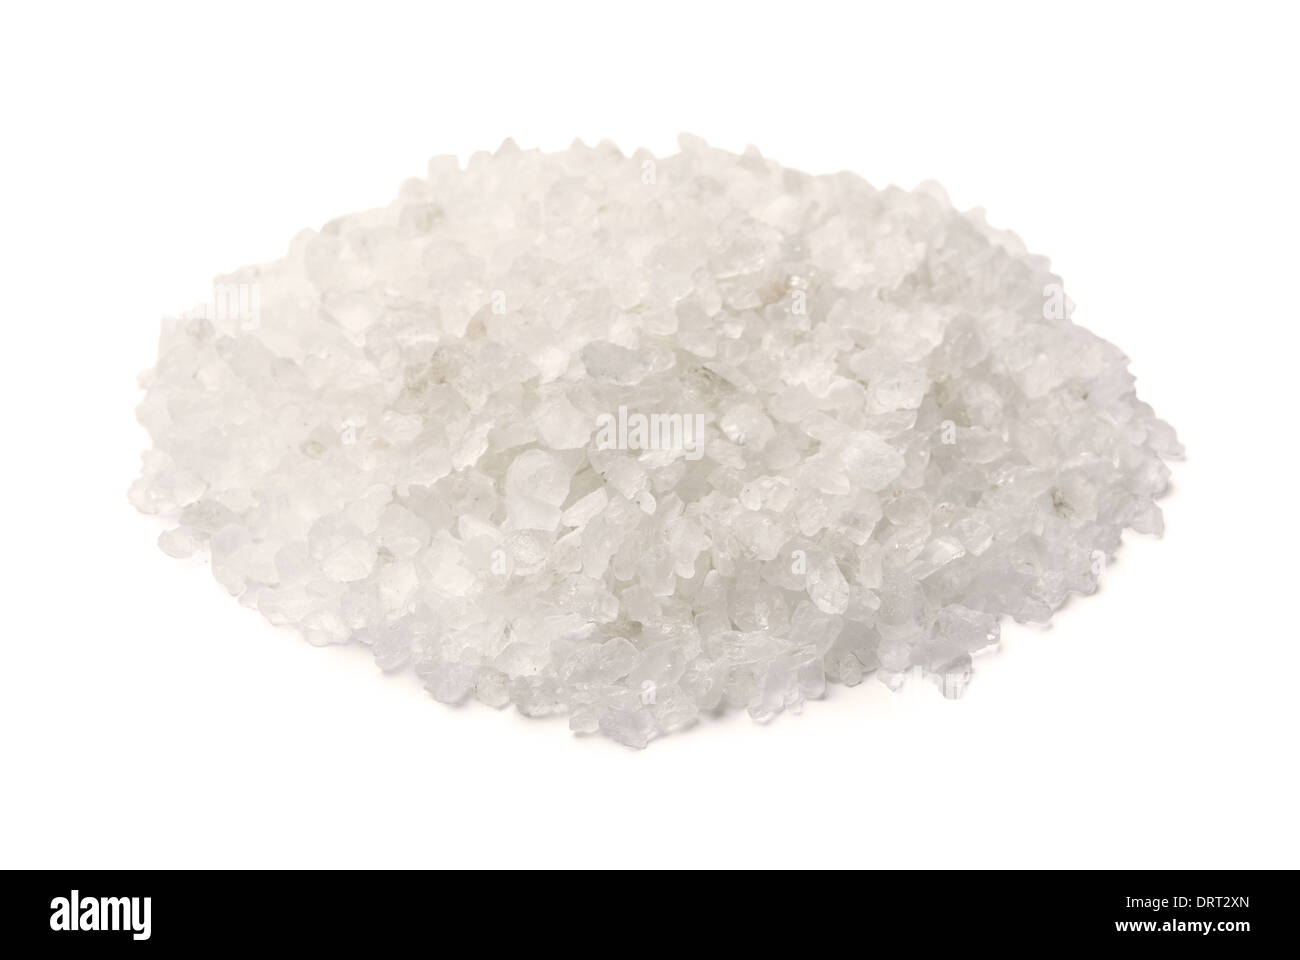 Salt on a white background Stock Photo